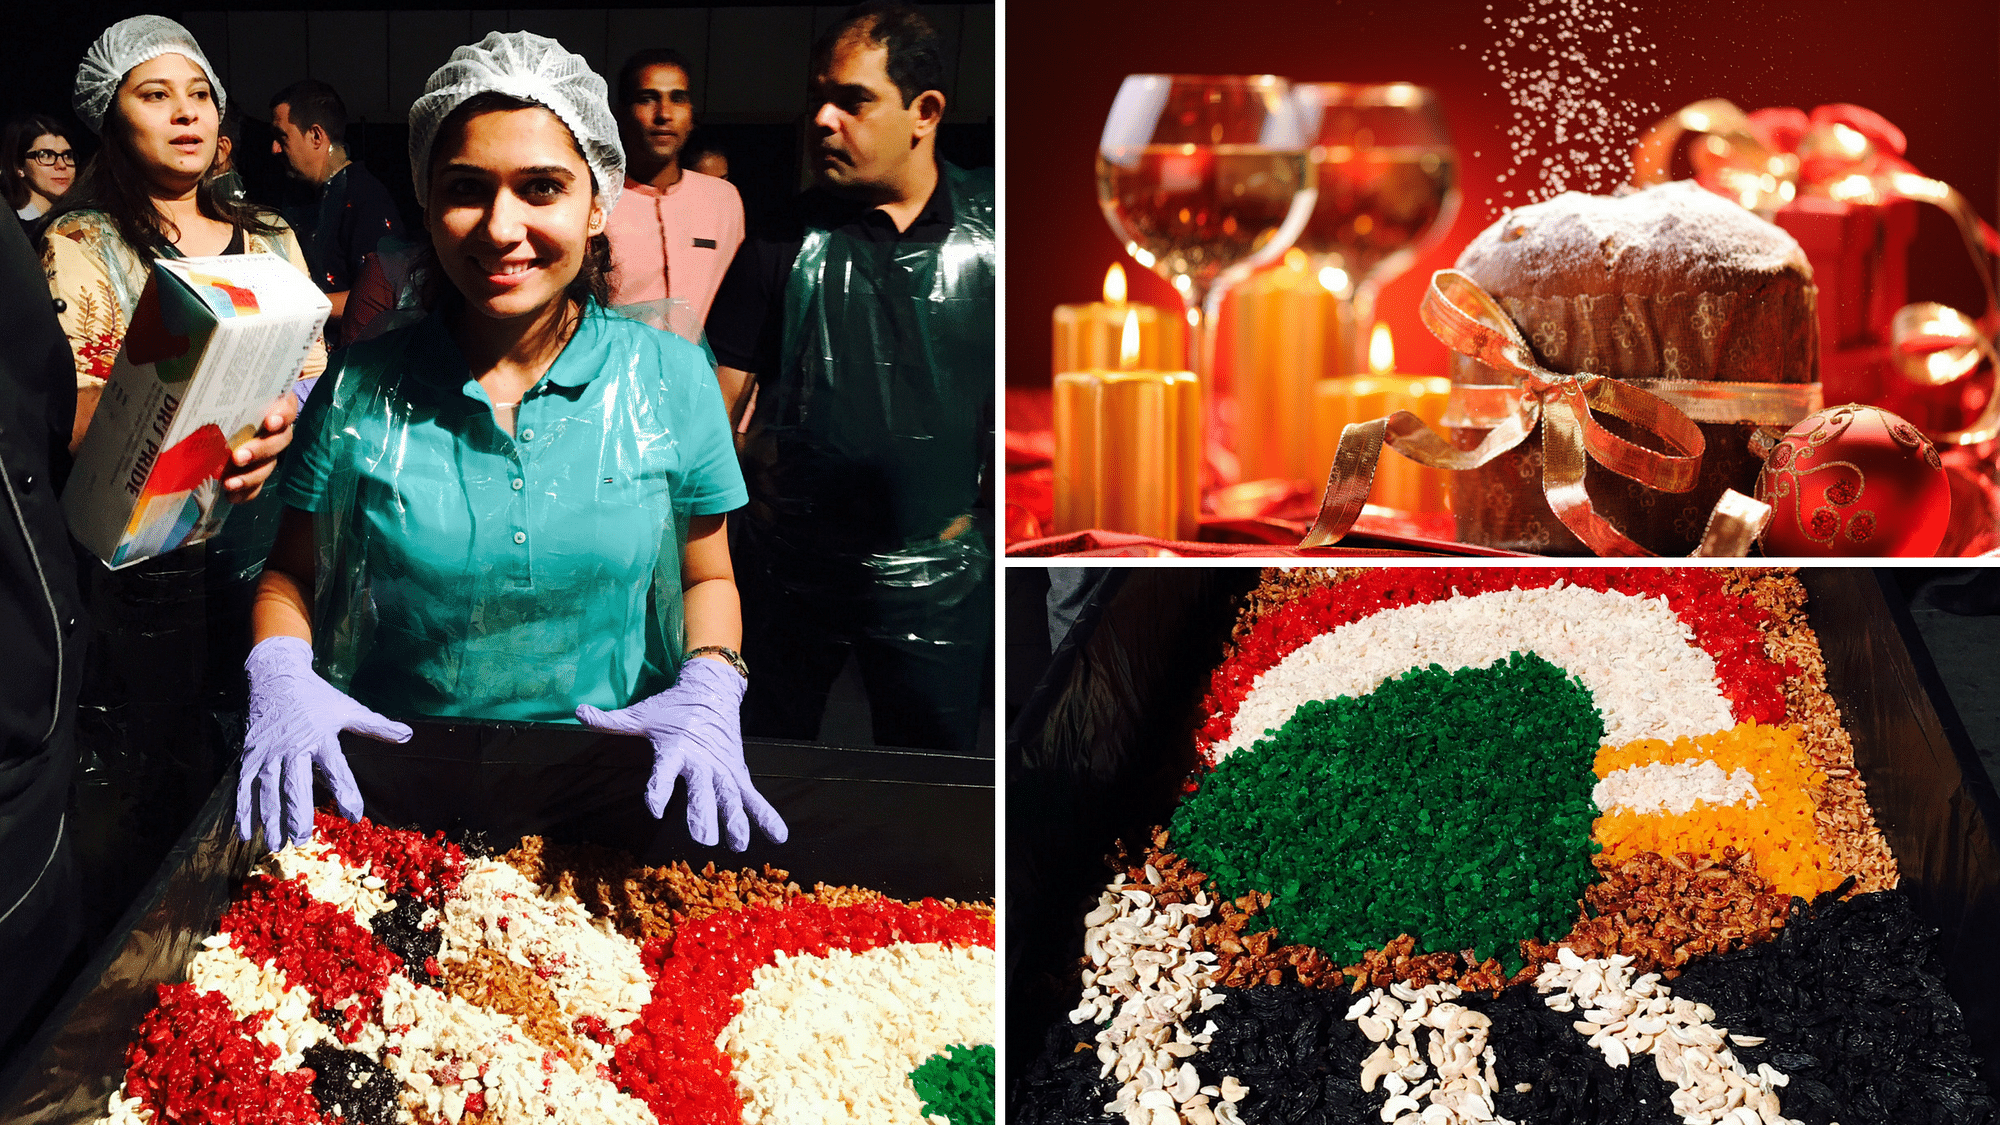 Cake mixing is a legit fun Christmas activity! (Photo Courtesy: Pranjali Bhonde Pethe/iStock)